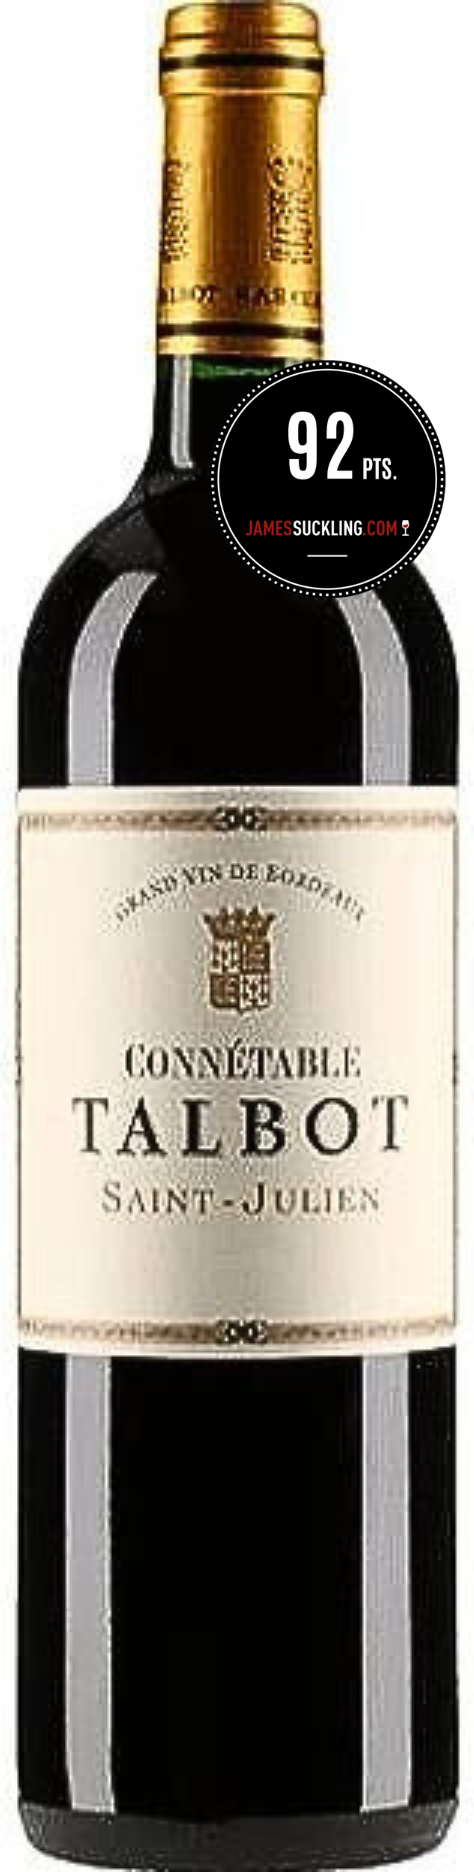 Connetable Talbot 2018 (JS: 92)